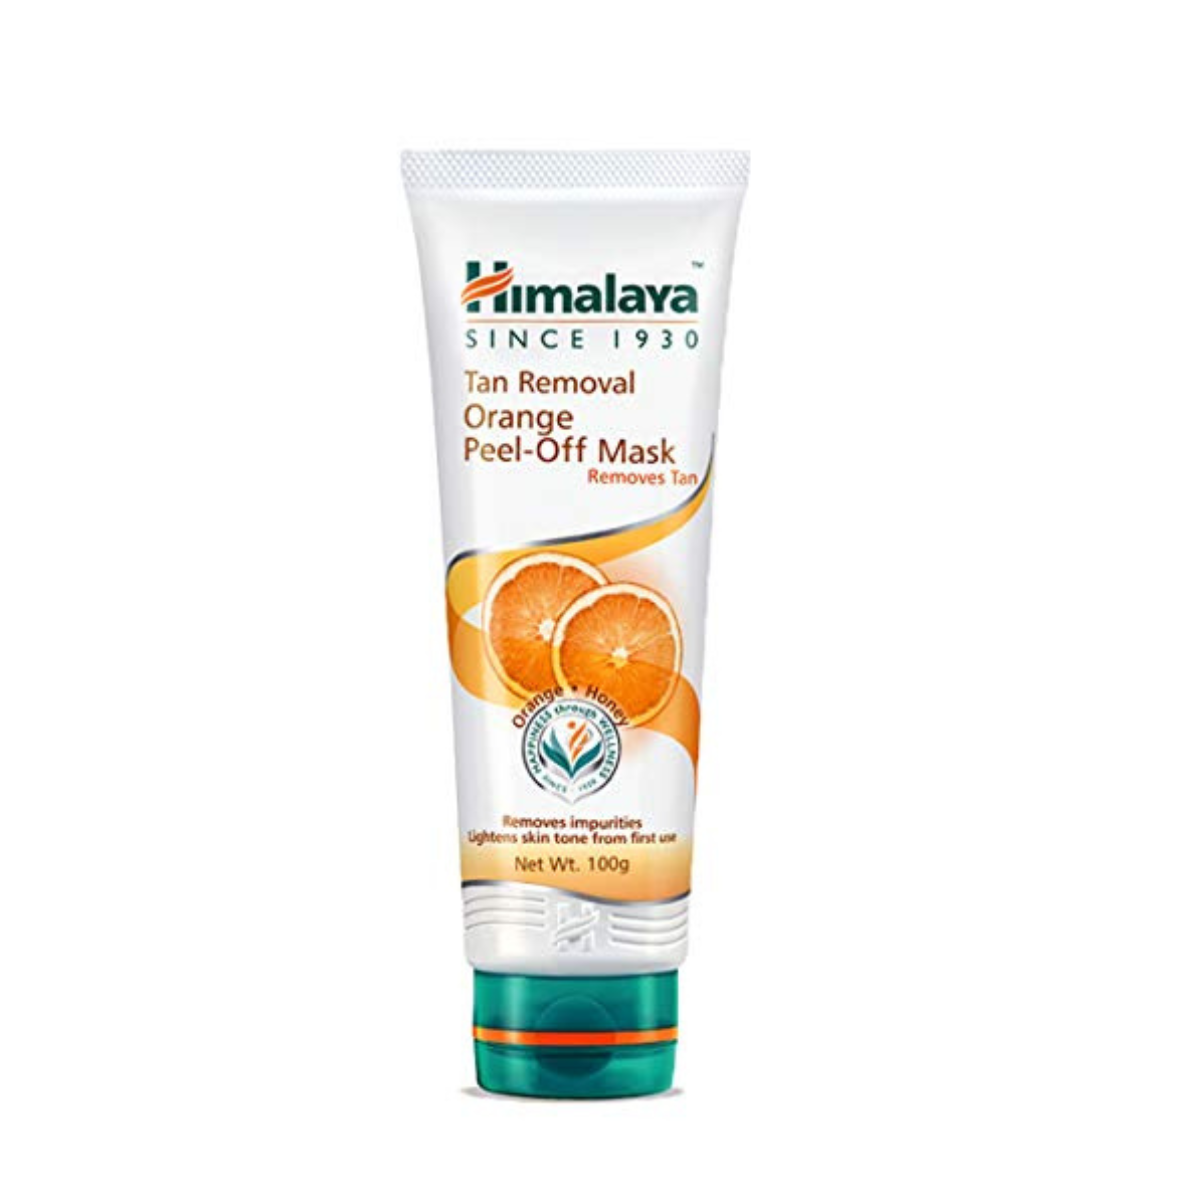 Himalaya Tan Removal Orange Peel Off Mask - Remove Impurities - Lightens Skin Tone - 100g